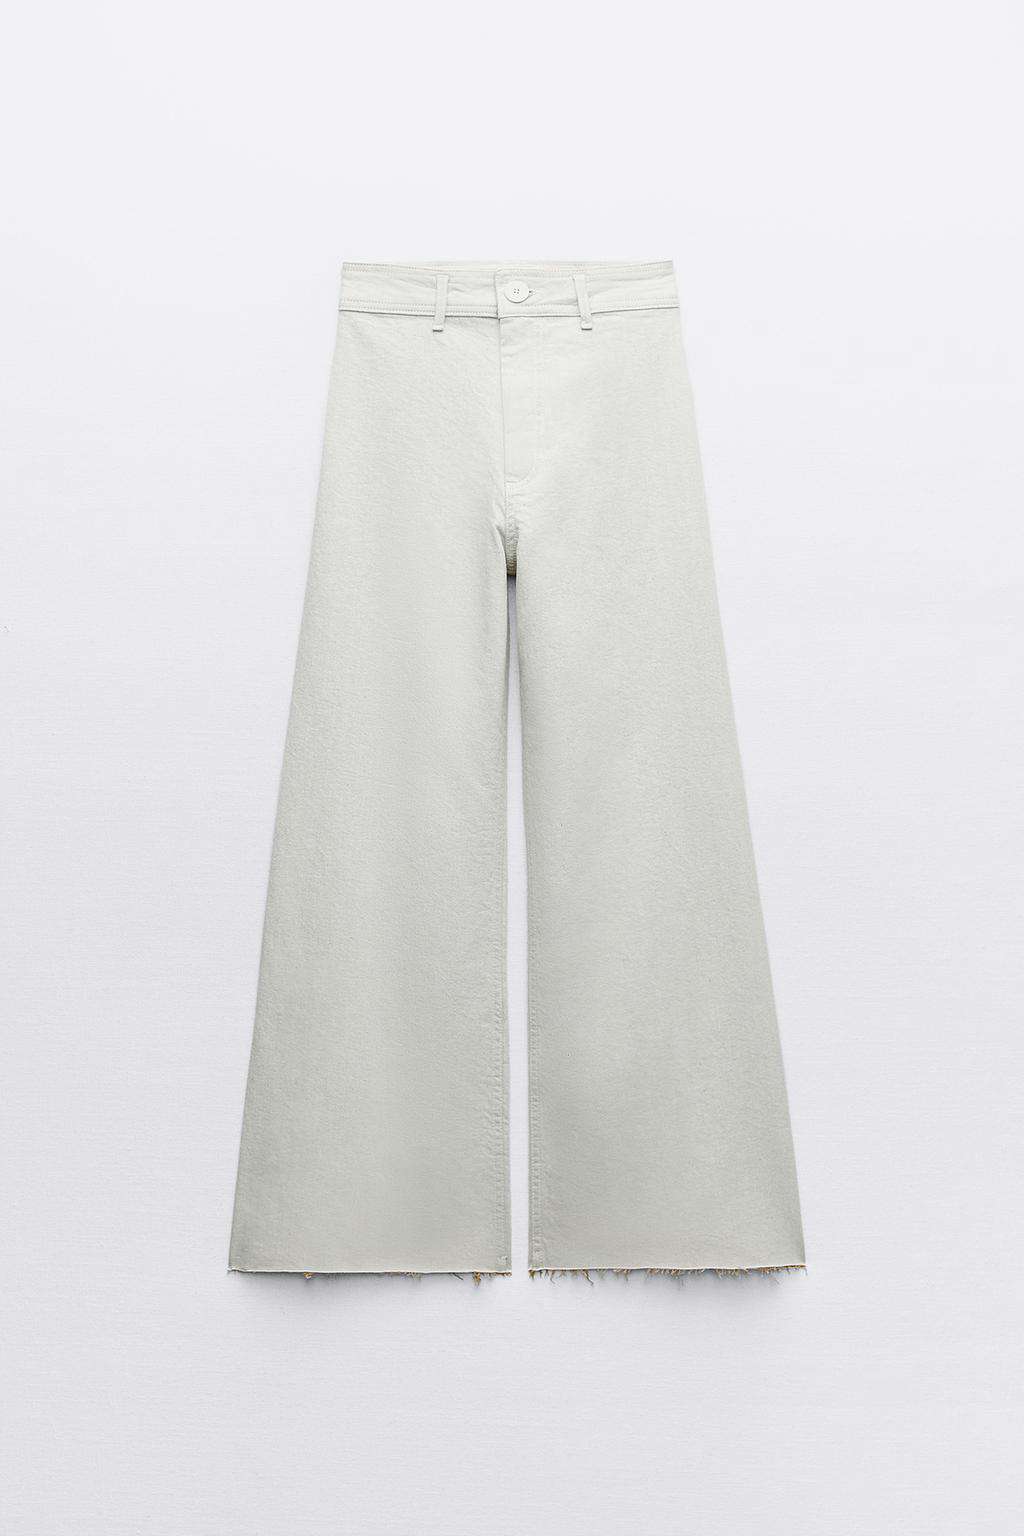 Pantalon blanco Zara